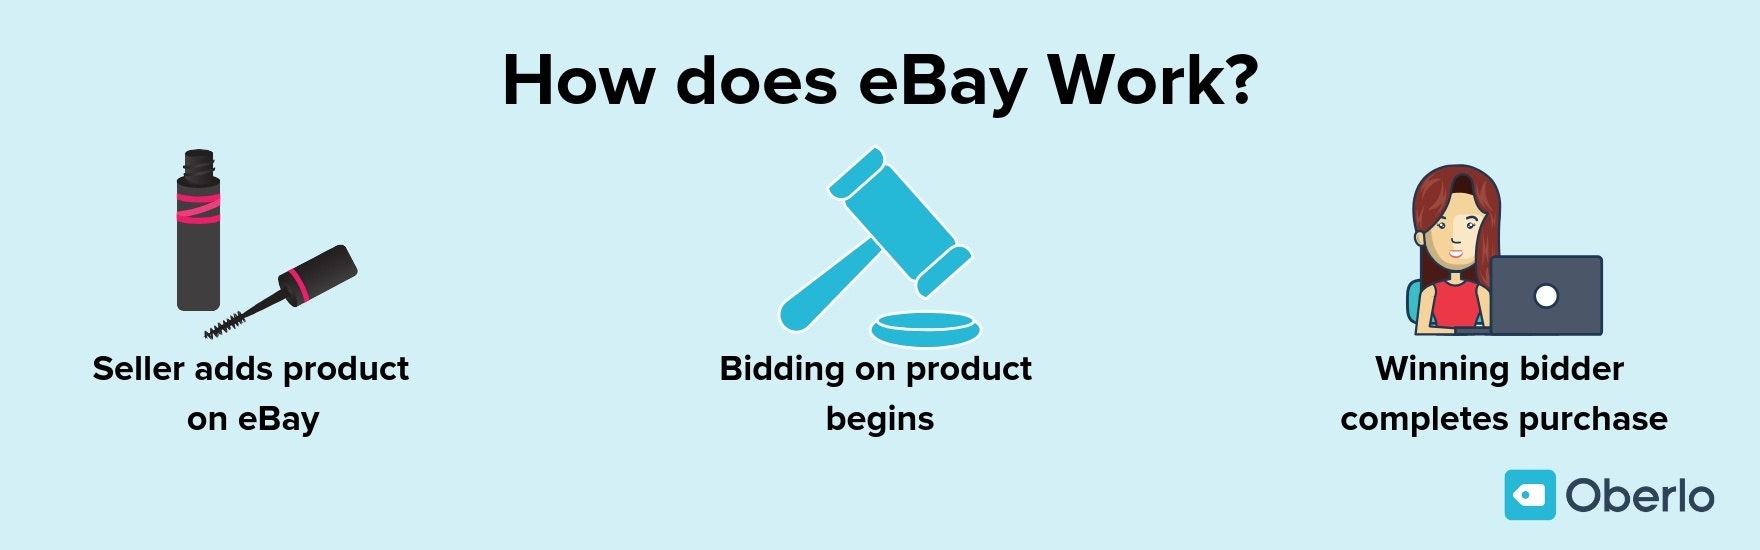 ebay是如何运作的?